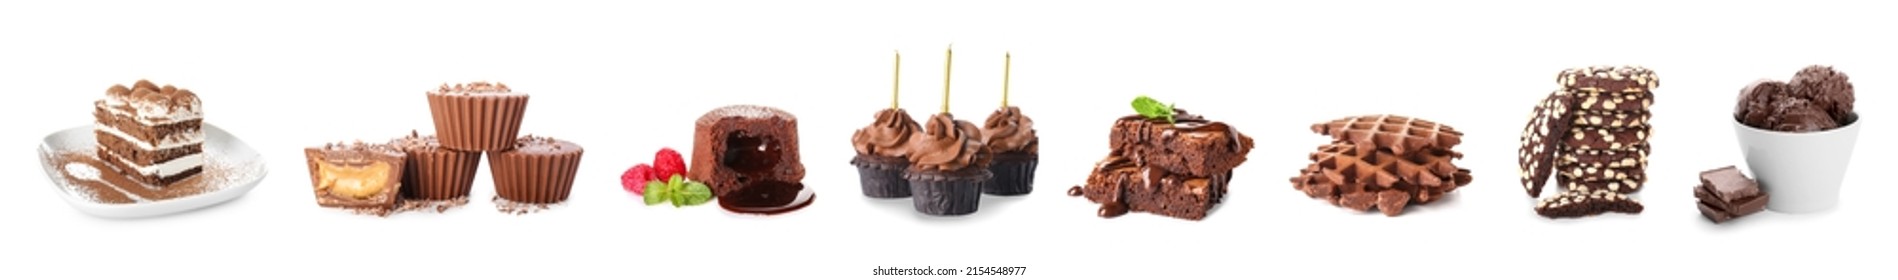 Set of tasty chocolate desserts on white background